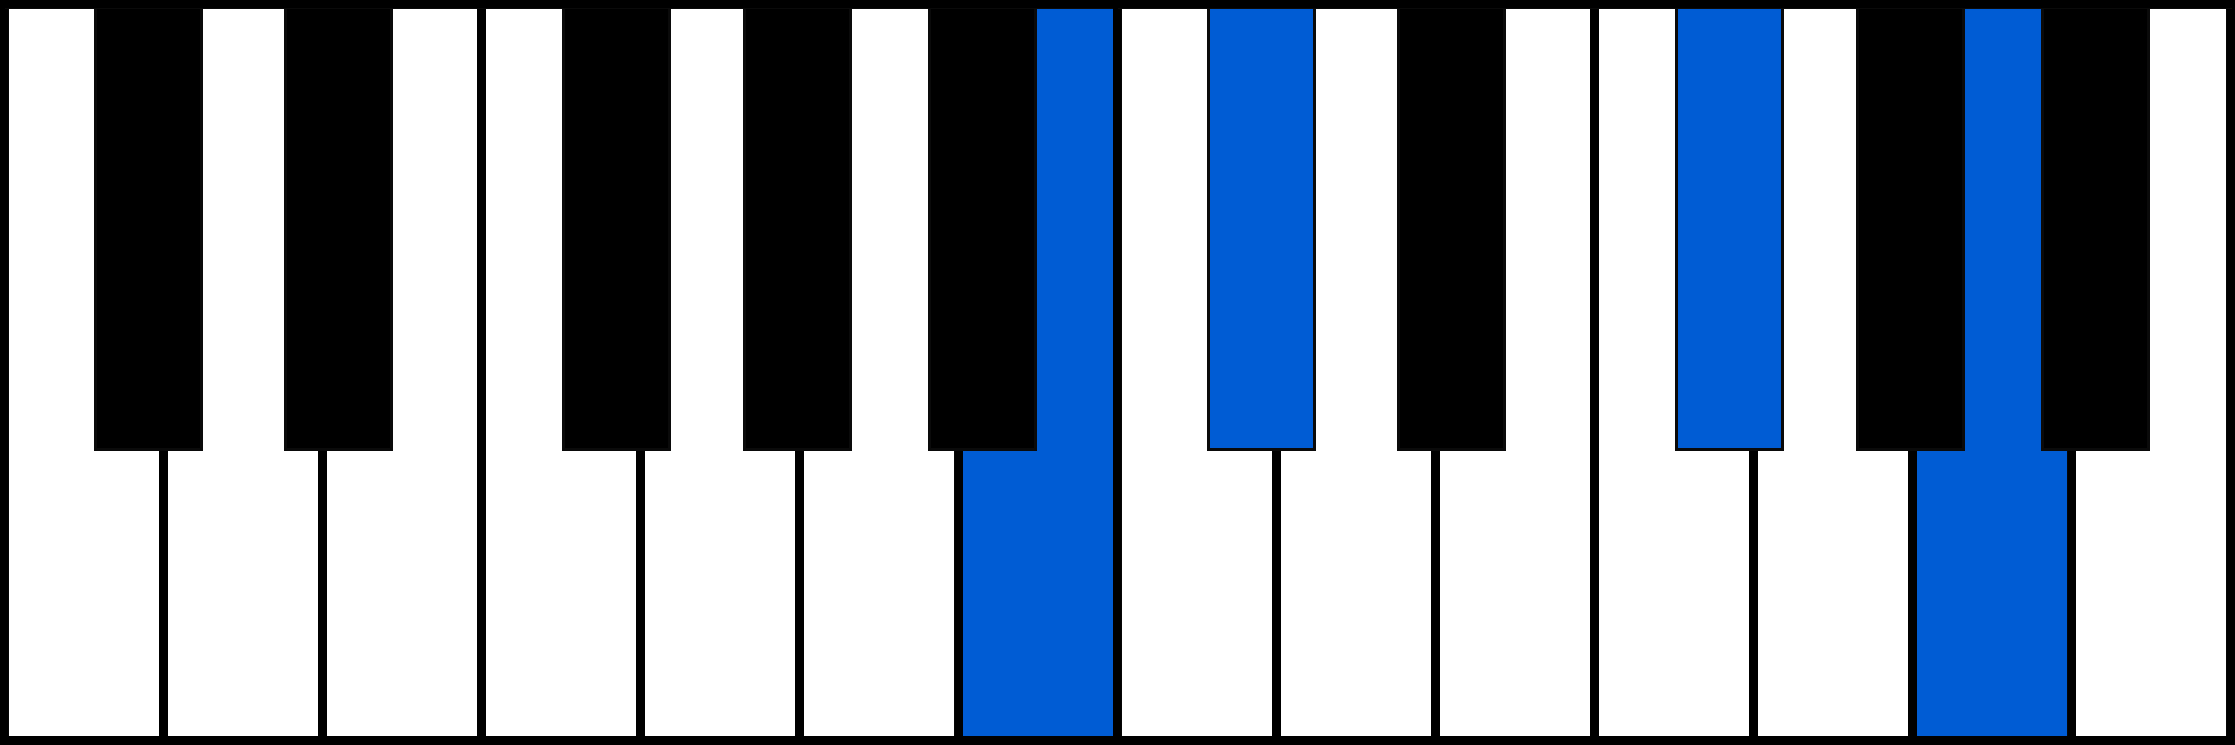 B7sus2 piano chord fingering